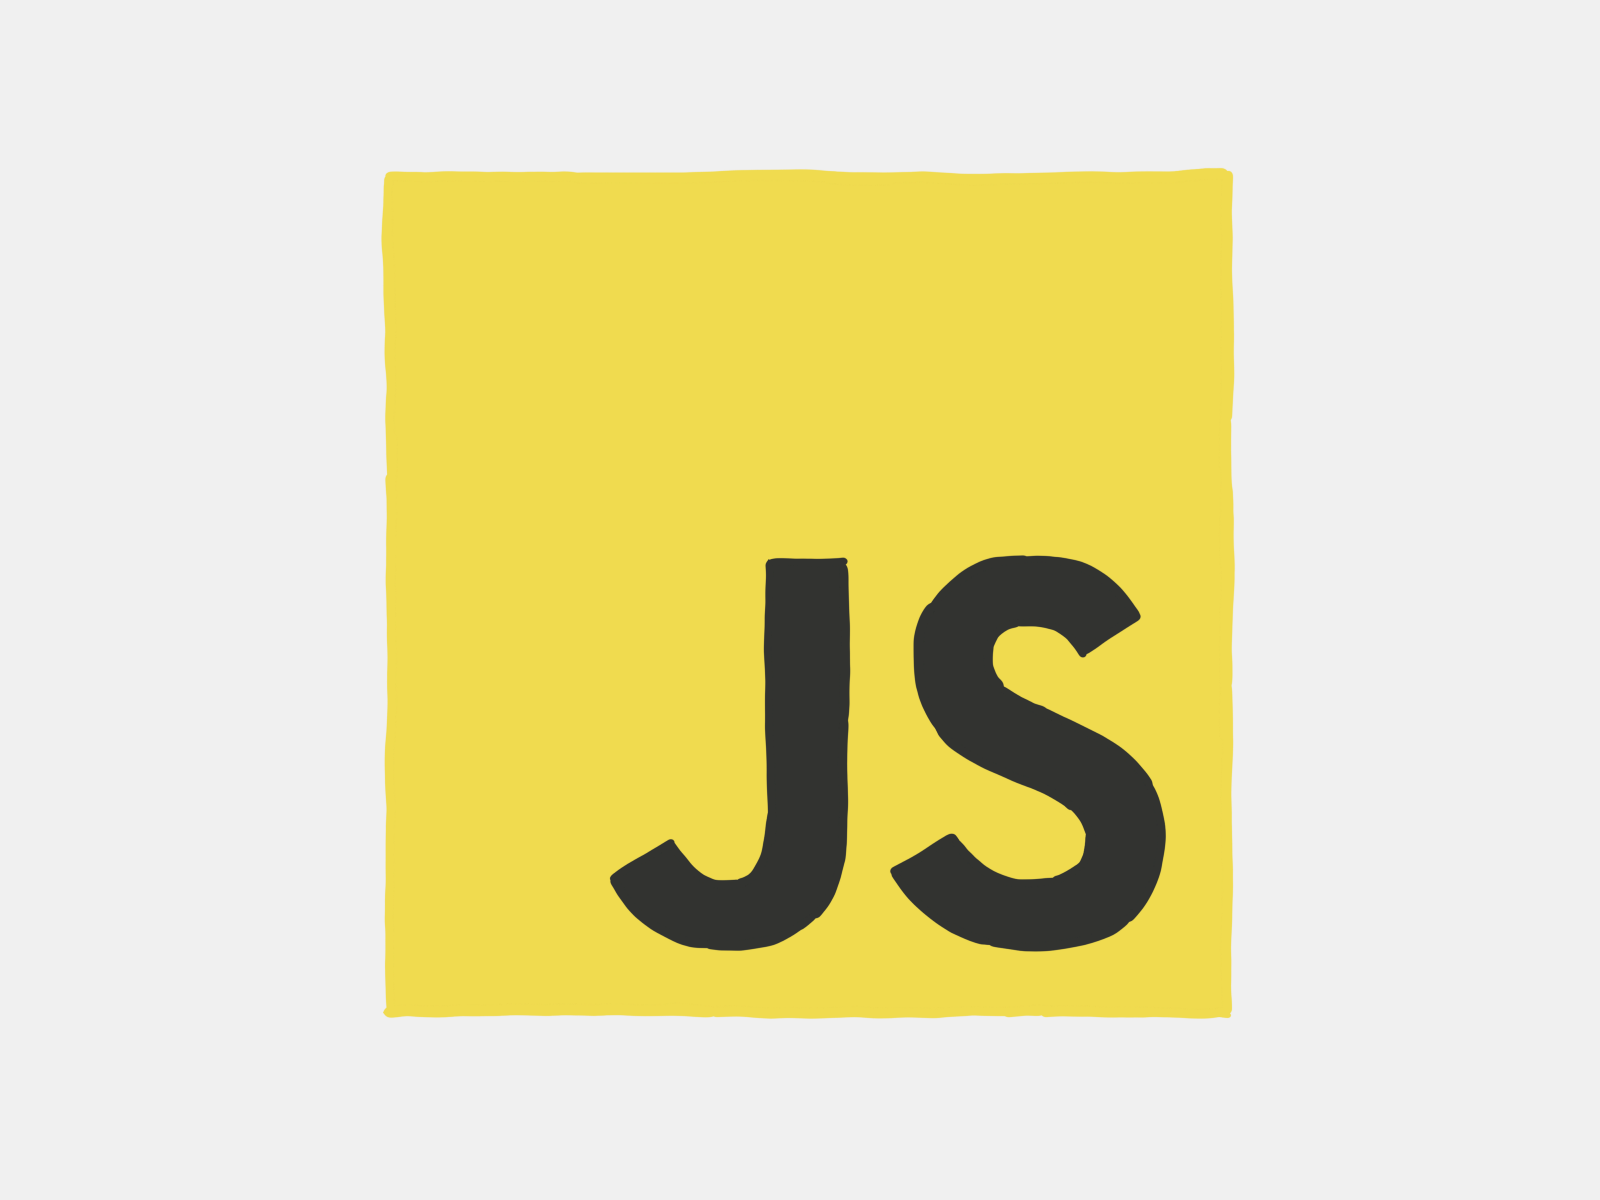 An illustration of the JavaScript logo.